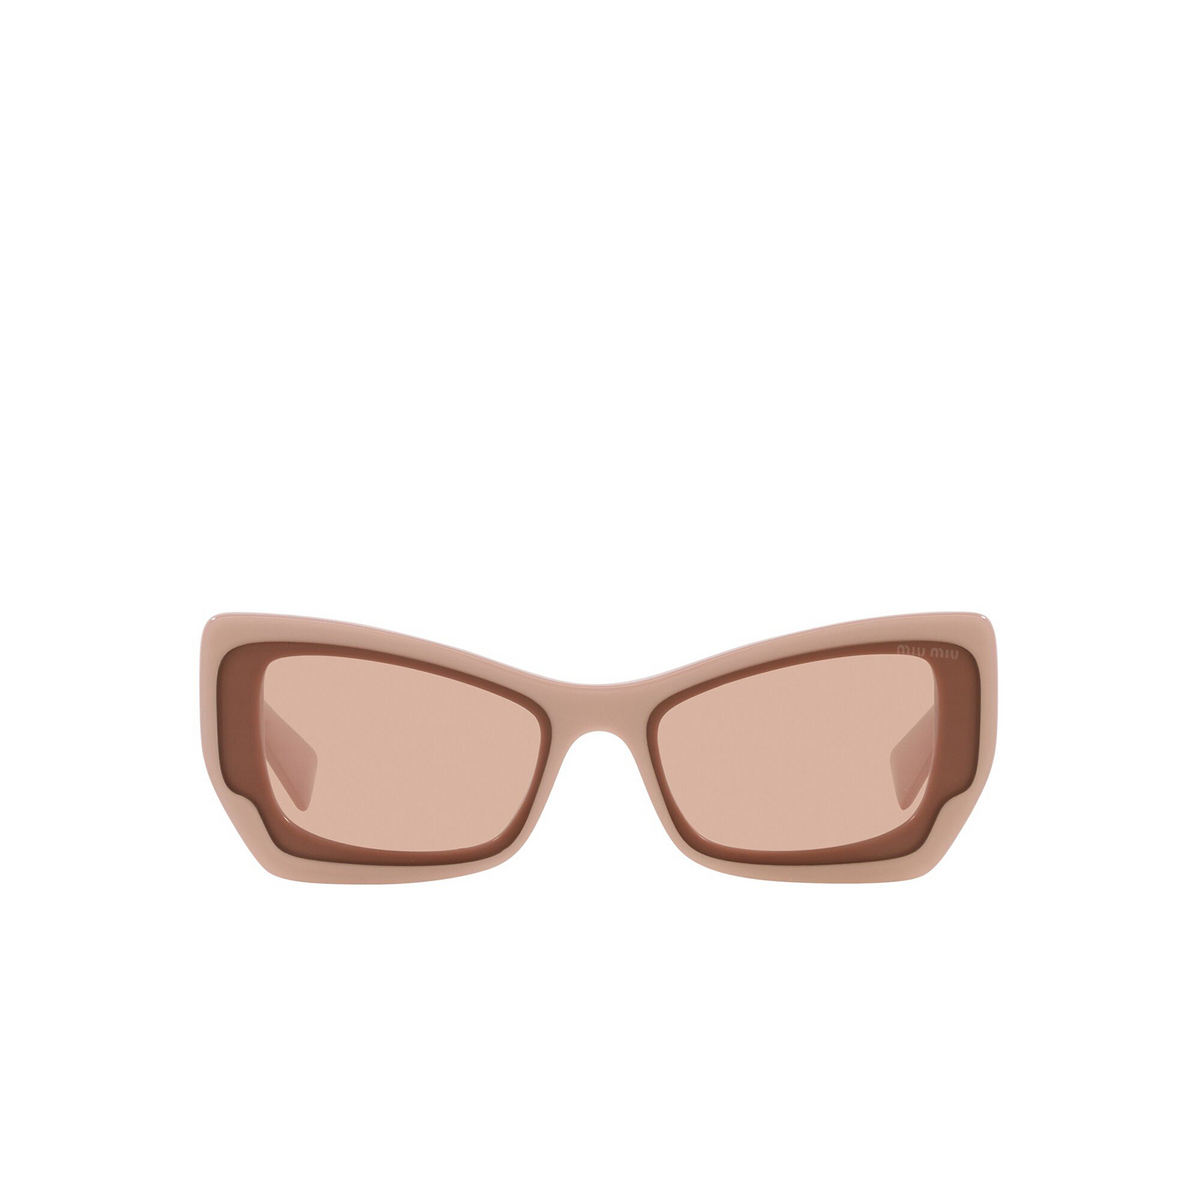 Miu Miu® Irregular Sunglasses: MU 07XS color Pink 03T3D2 - front view.